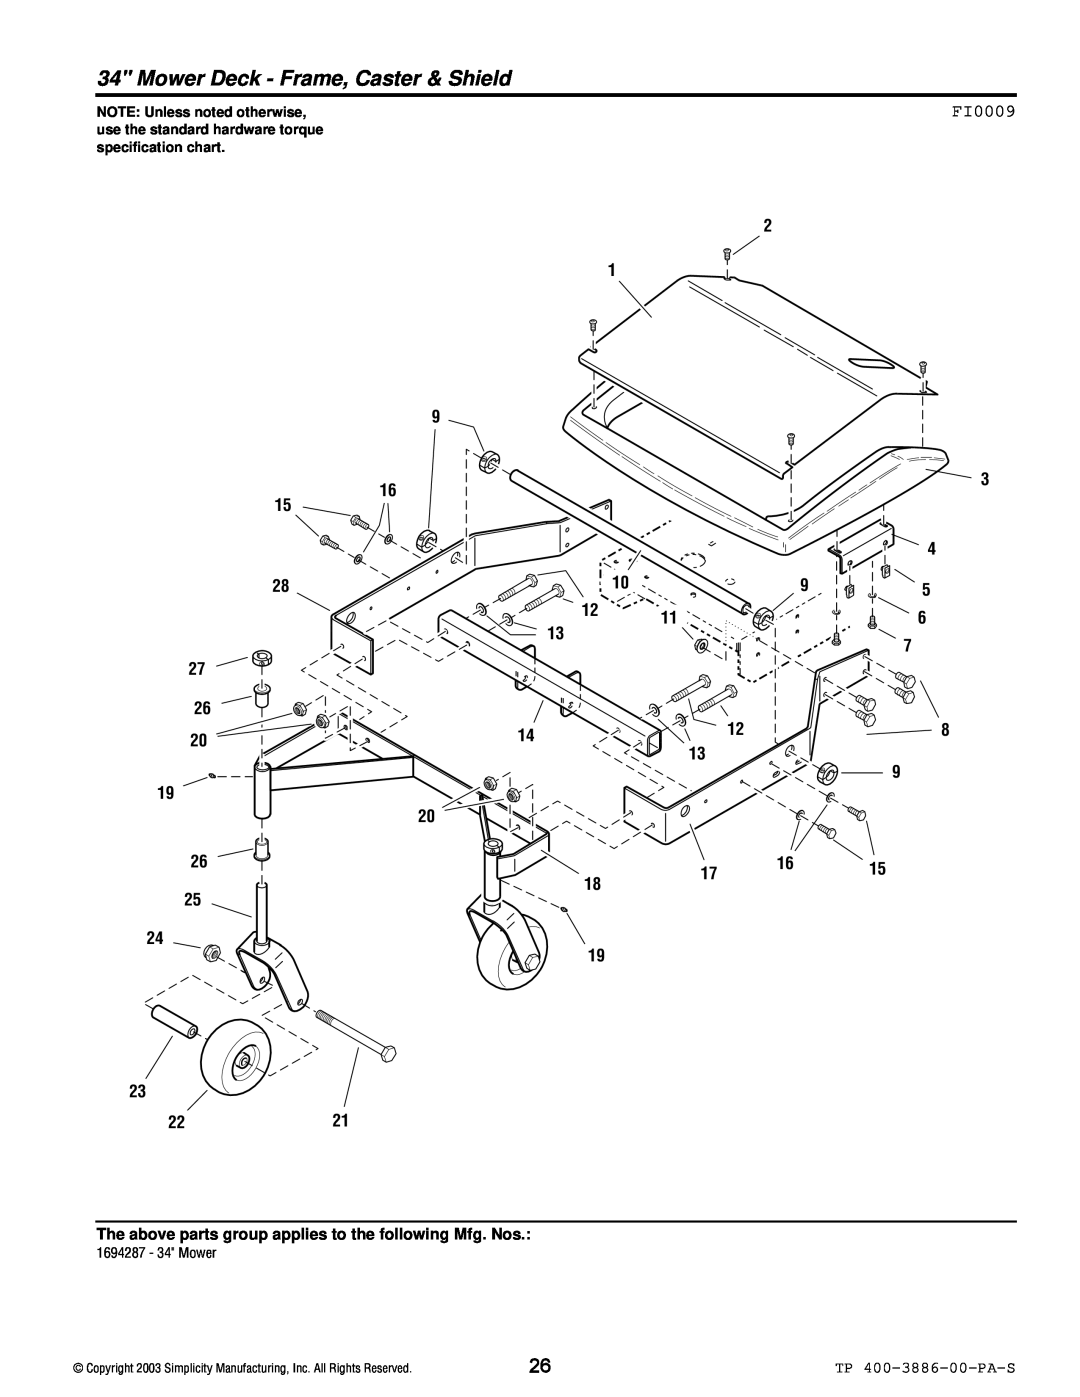 Simplicity Series Transaxle manual Mower Deck - Frame, Caster & Shield, FI0009 